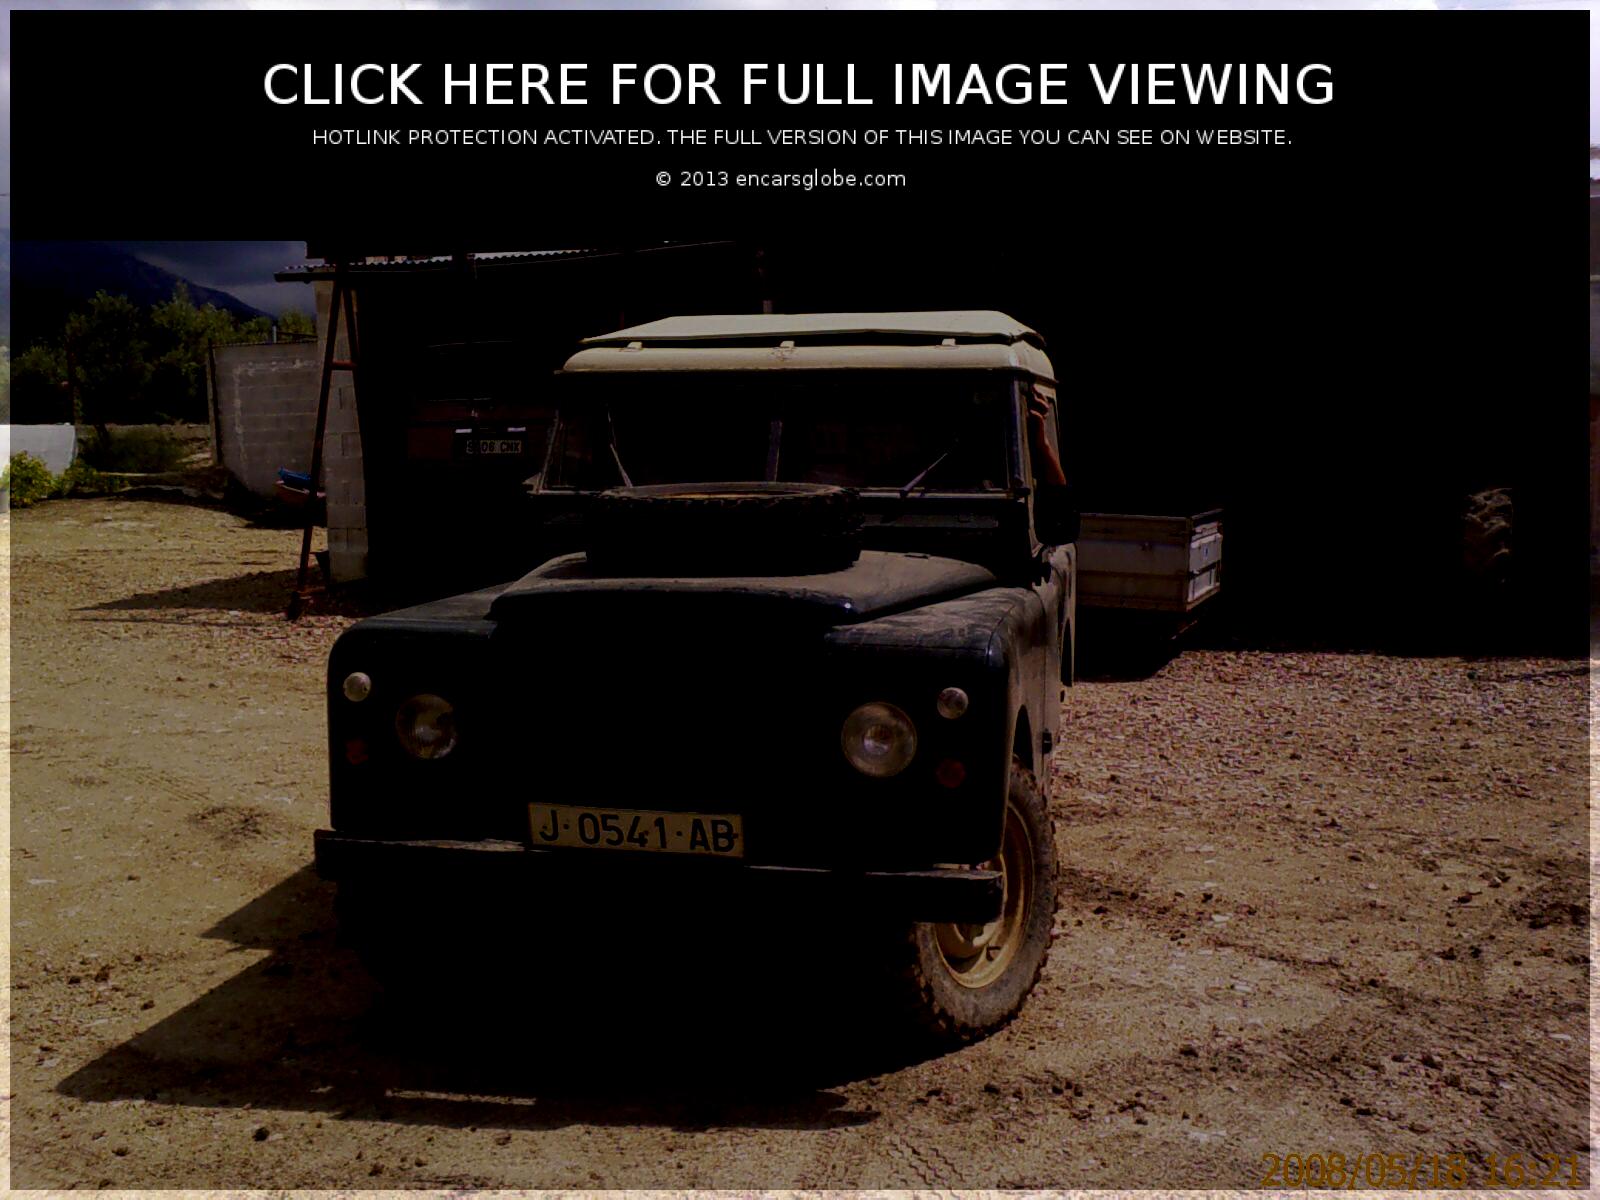 Santana Land Rover Especial: Photo gallery, complete information ...